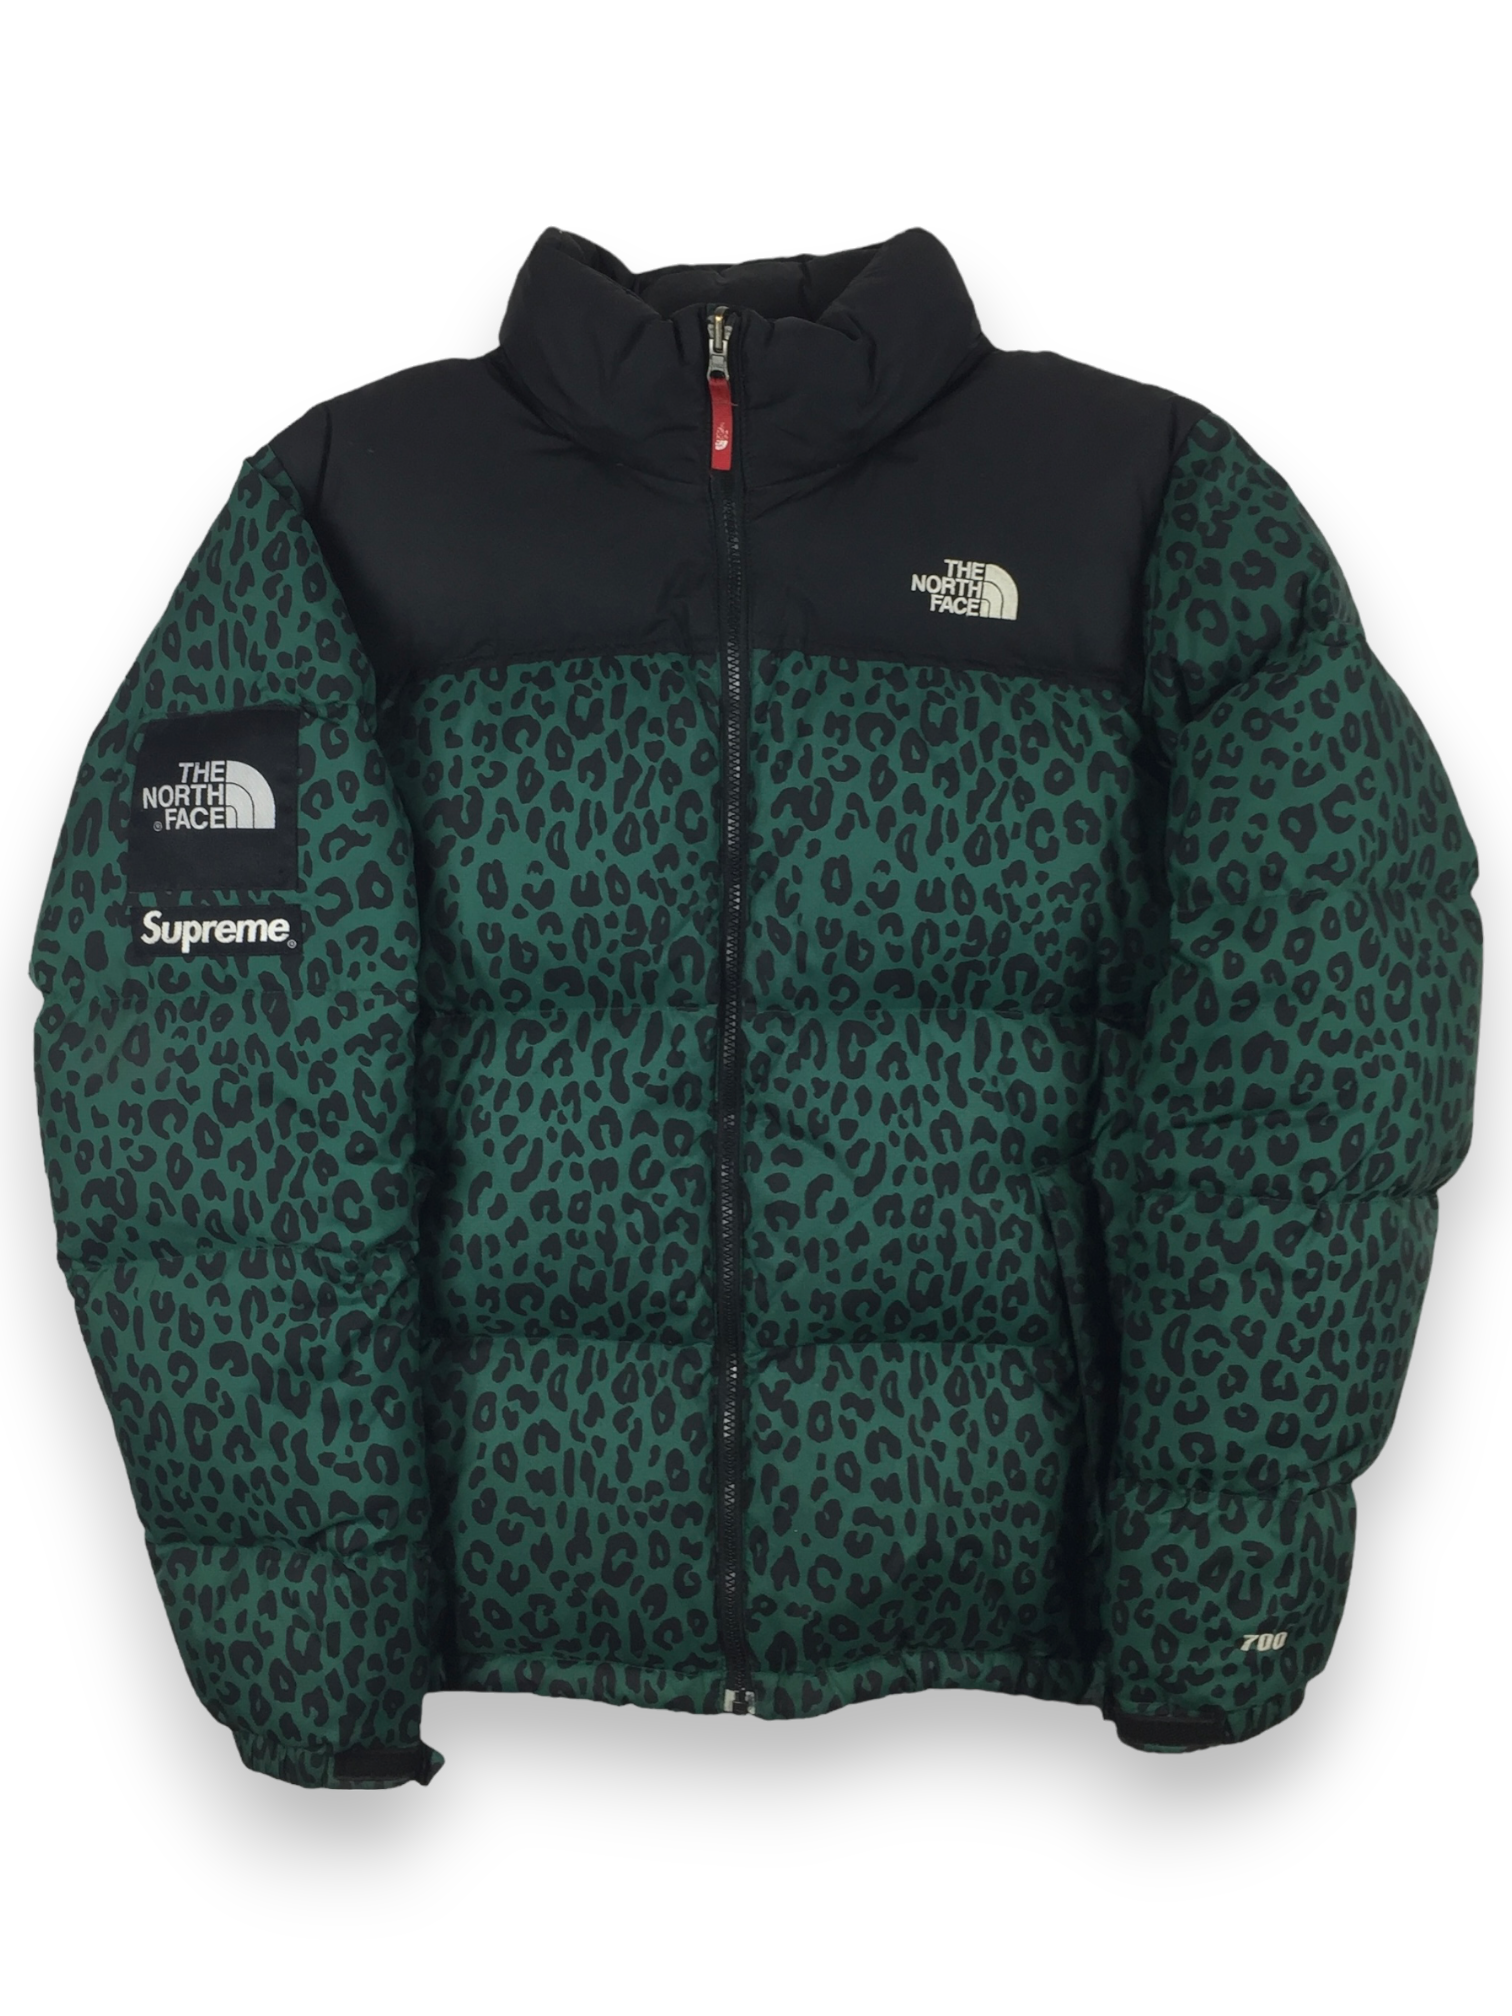 2011 Supreme x The North Face Green Leopard